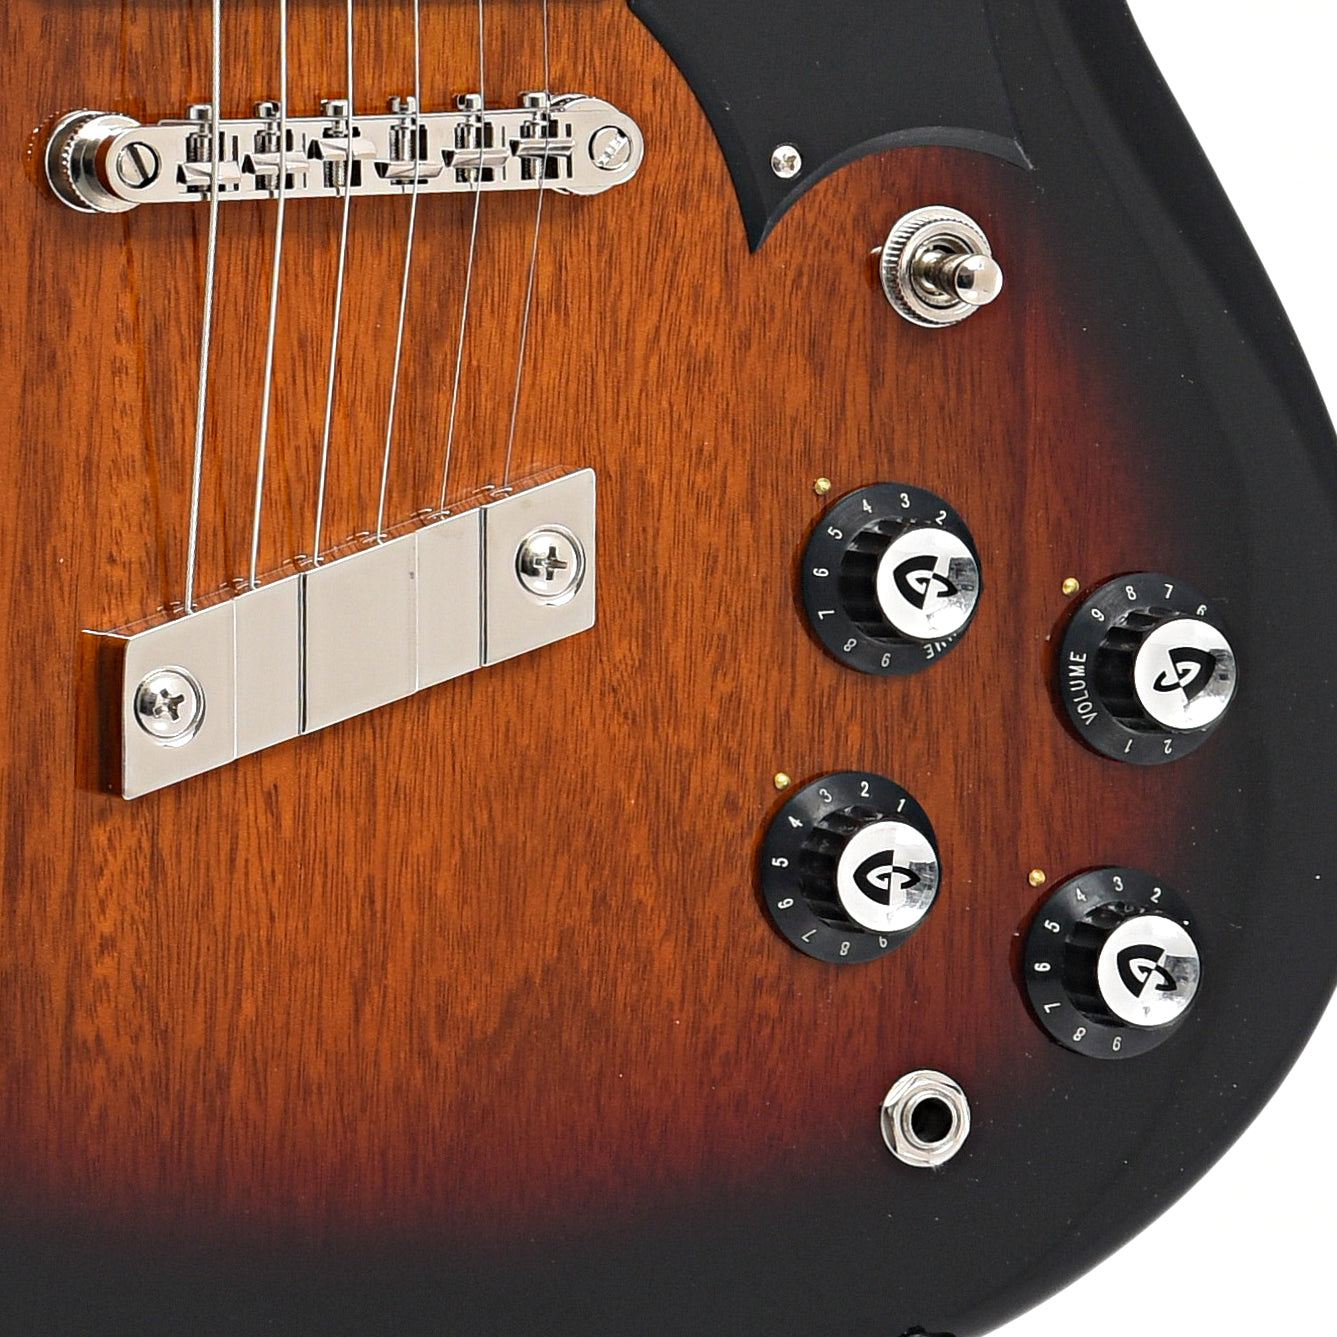 Tailpiece, Bridge and controls of Guild Polara Deluxe Electric Guitar, Vintage Sunburst